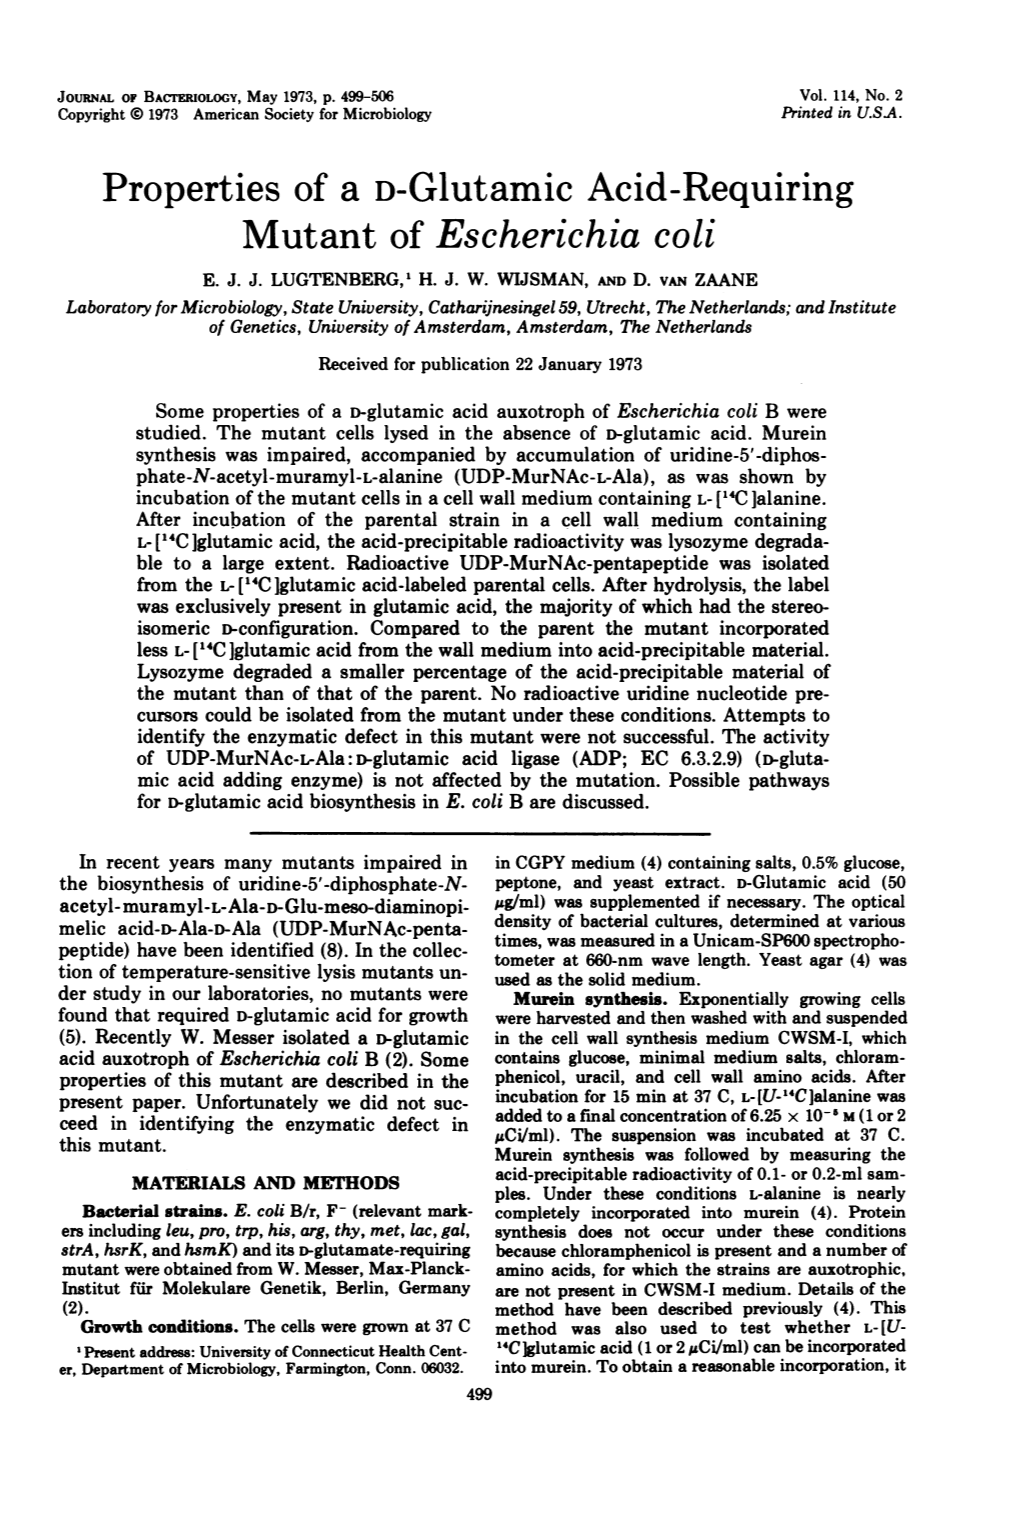 Properties of a D-Glutamic Acid-Requiring Mutant of Escherichia Coli E